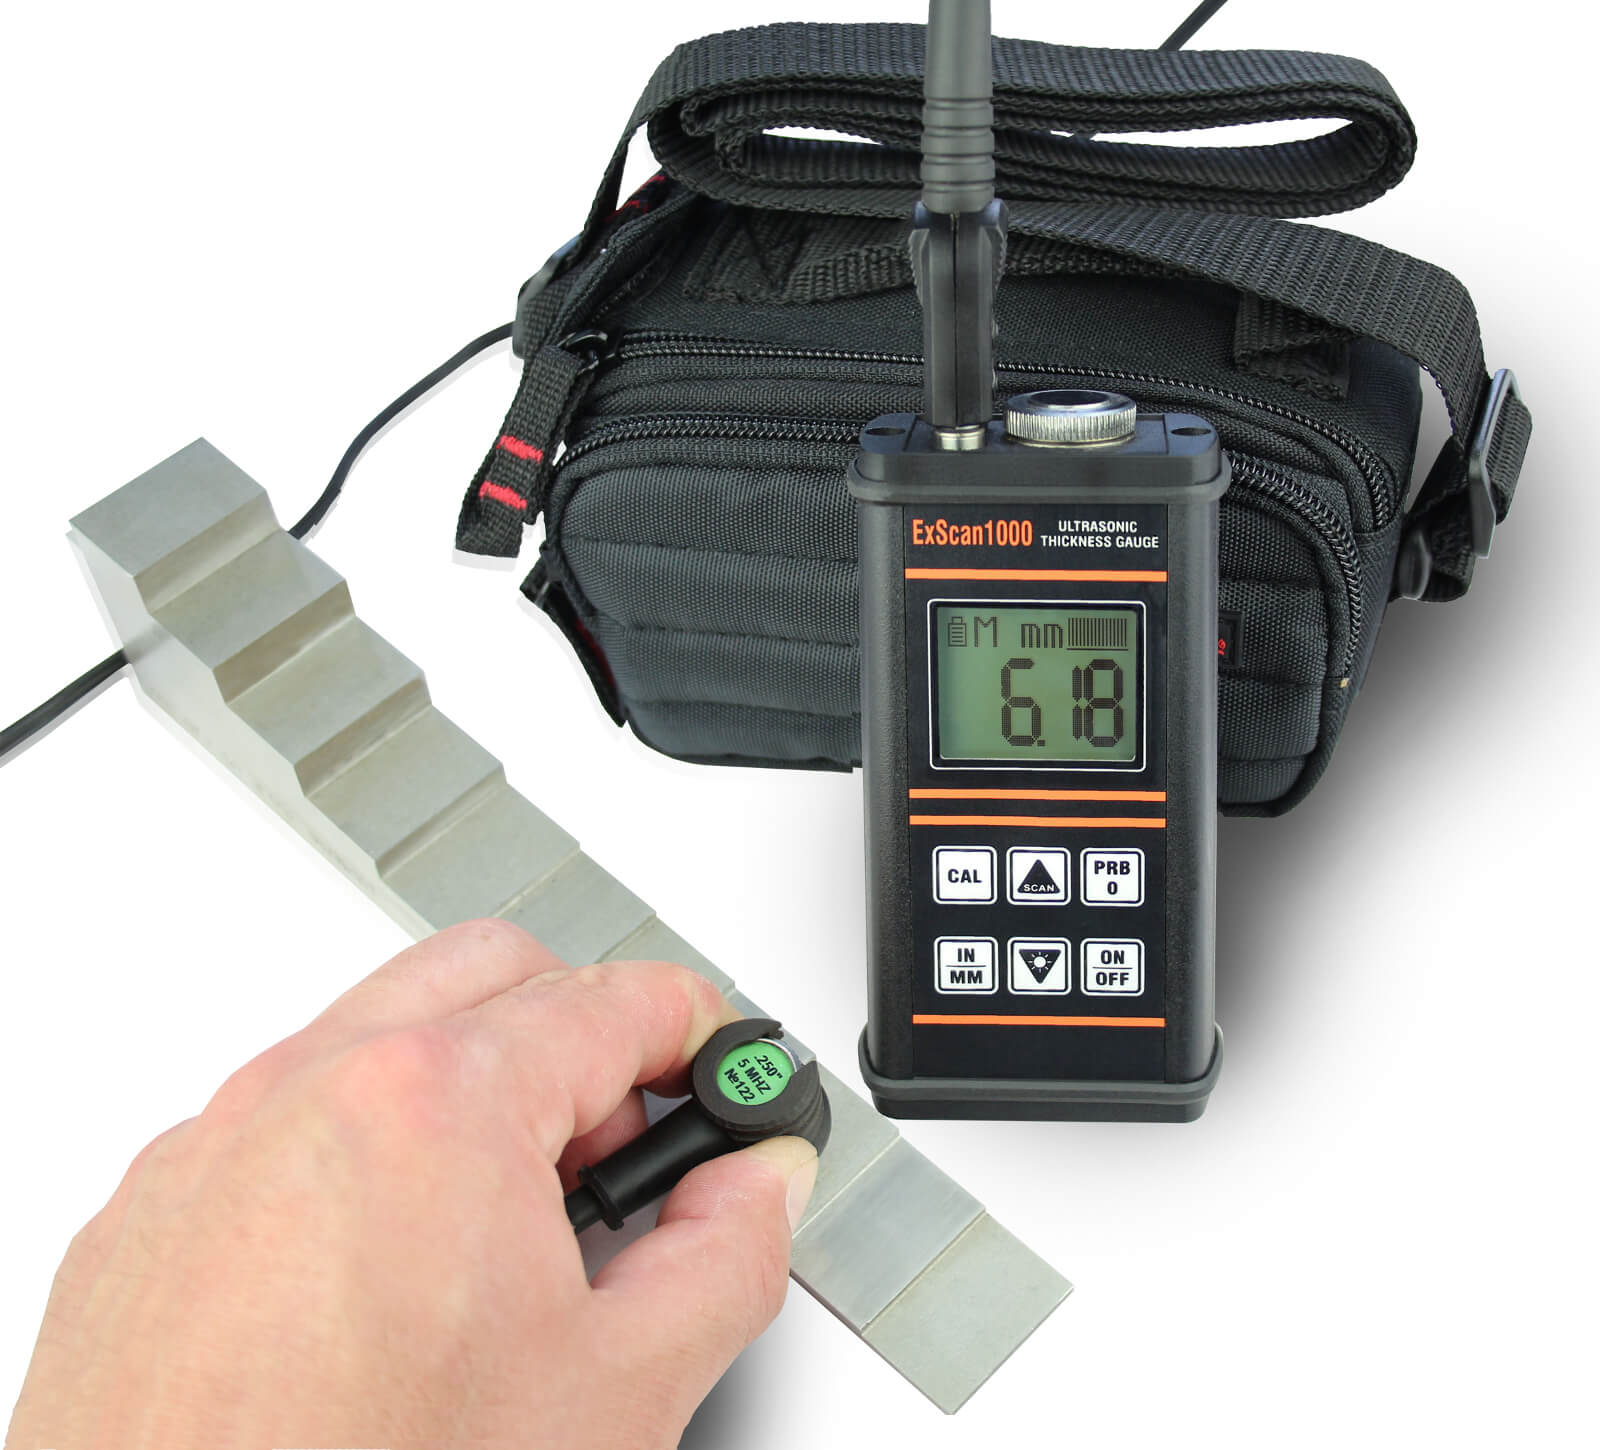 Ultrasonic thickness gauge ExScan1000